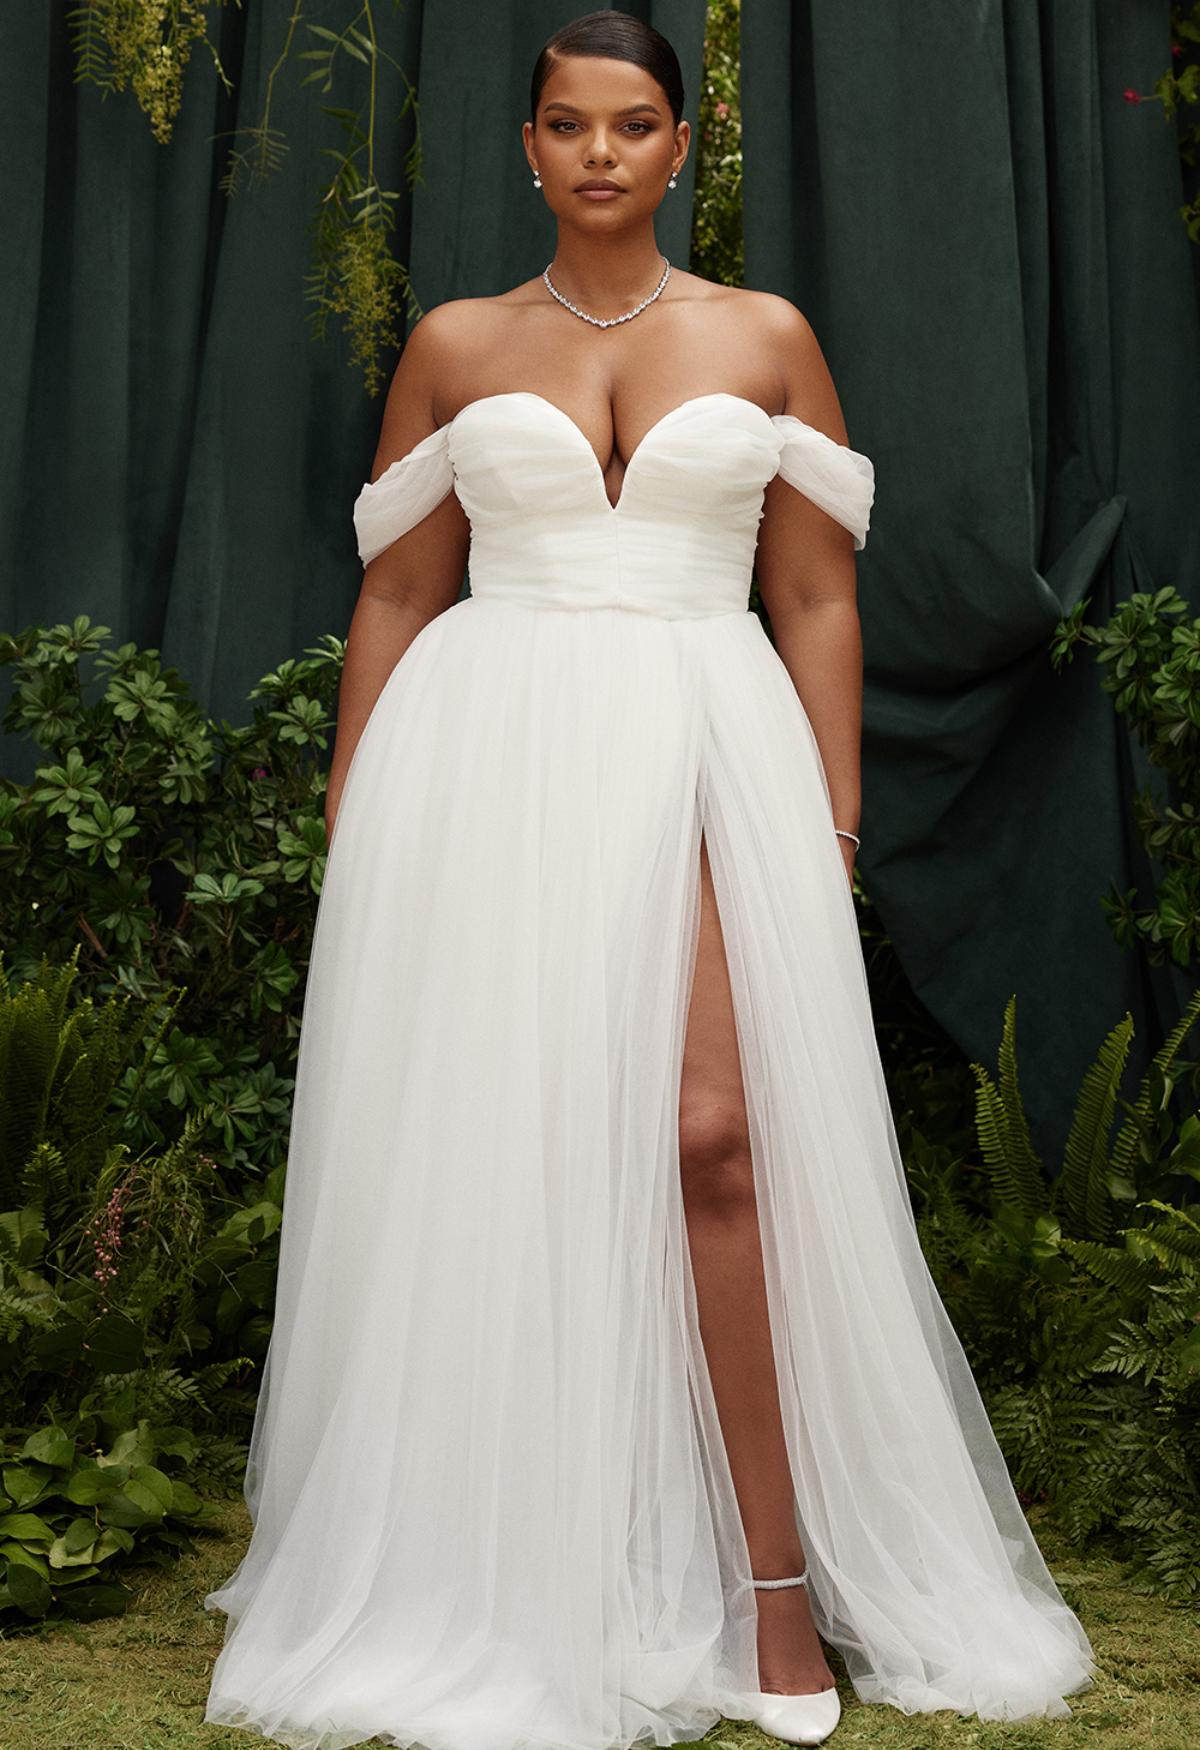 Small Size, Wedding dresses, Size: chest 34 waist 28(adjustable